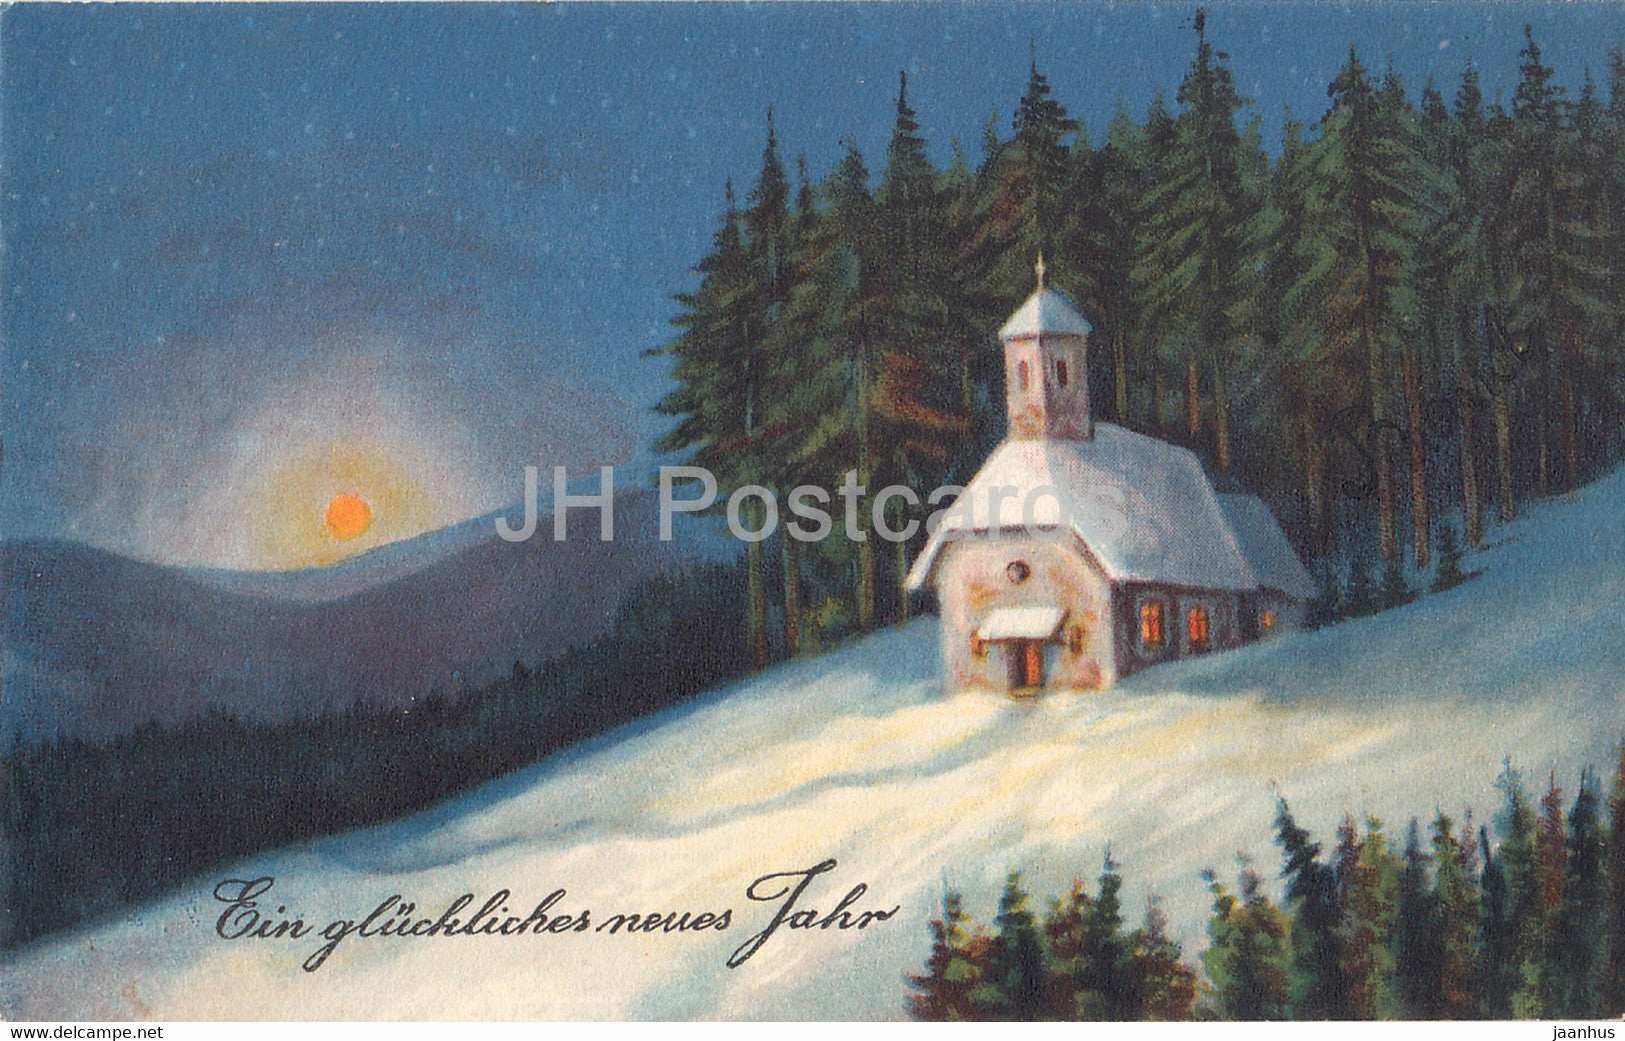 New Year Greeting Card - Ein Gluckliches Neues Jahr - church - moon - WSSB 9419/1 - old postcard - Germany - used - JH Postcards